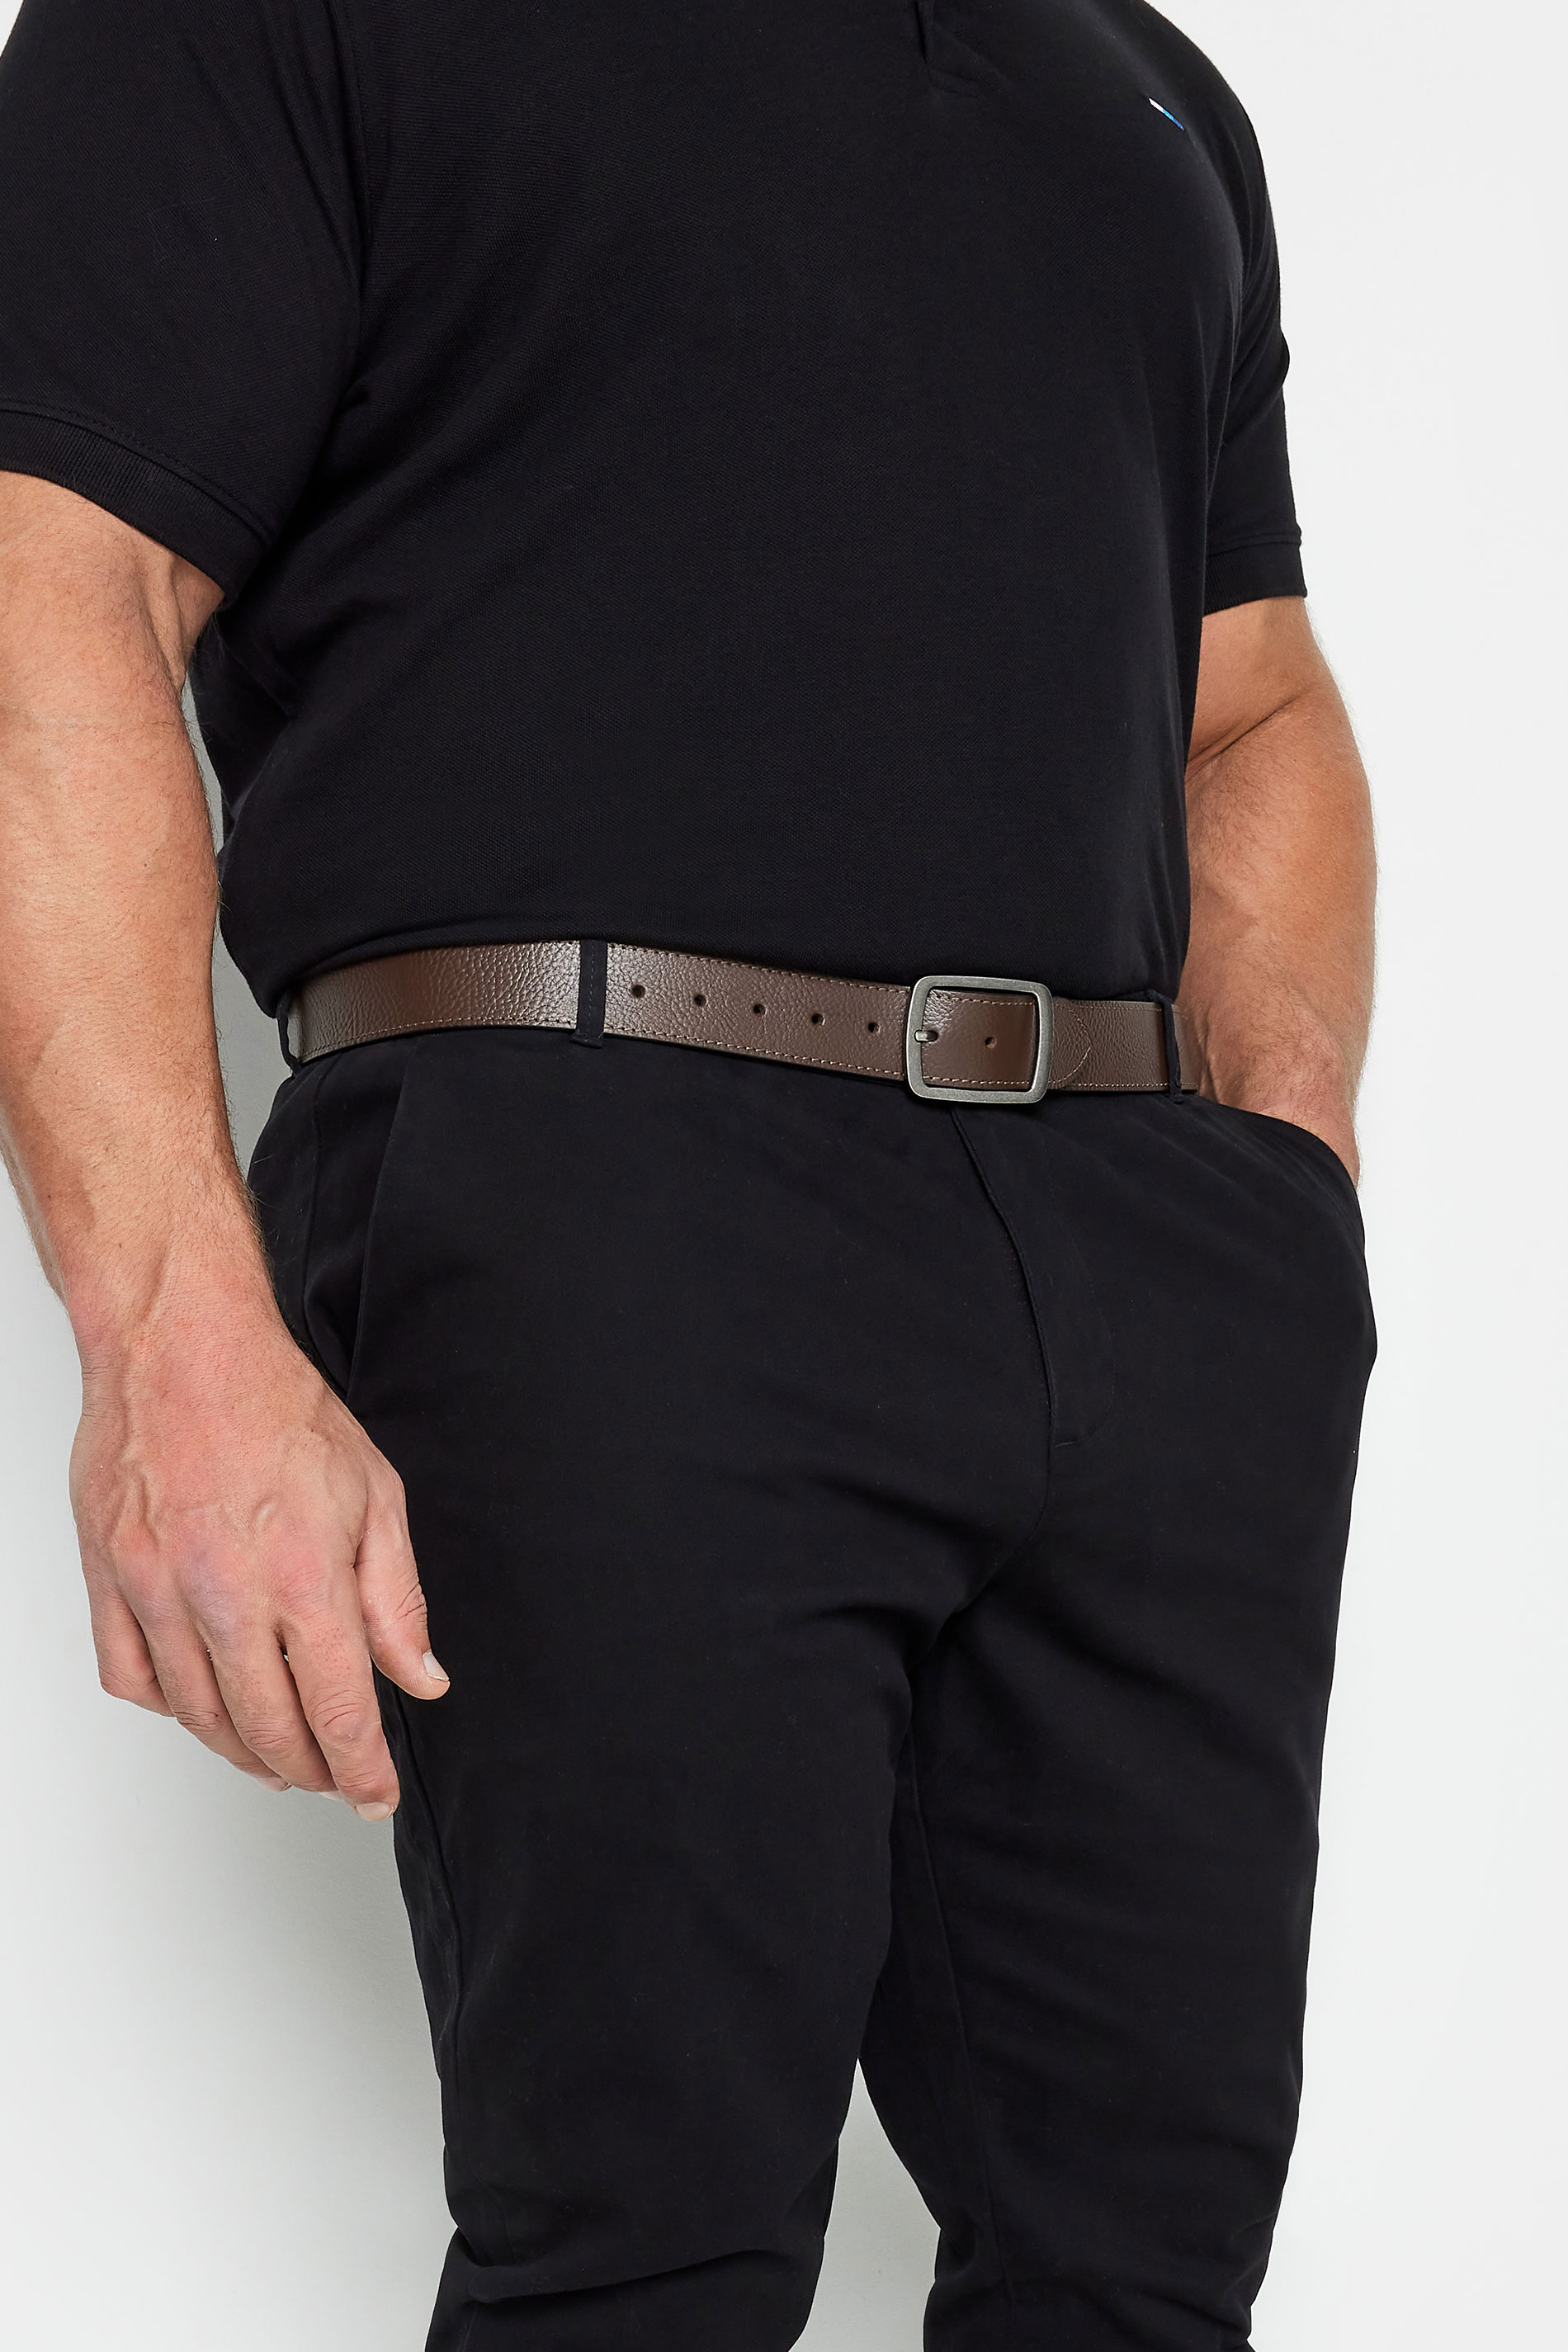 BadRhino Brown Plain Leather Belt | BadRhino 1